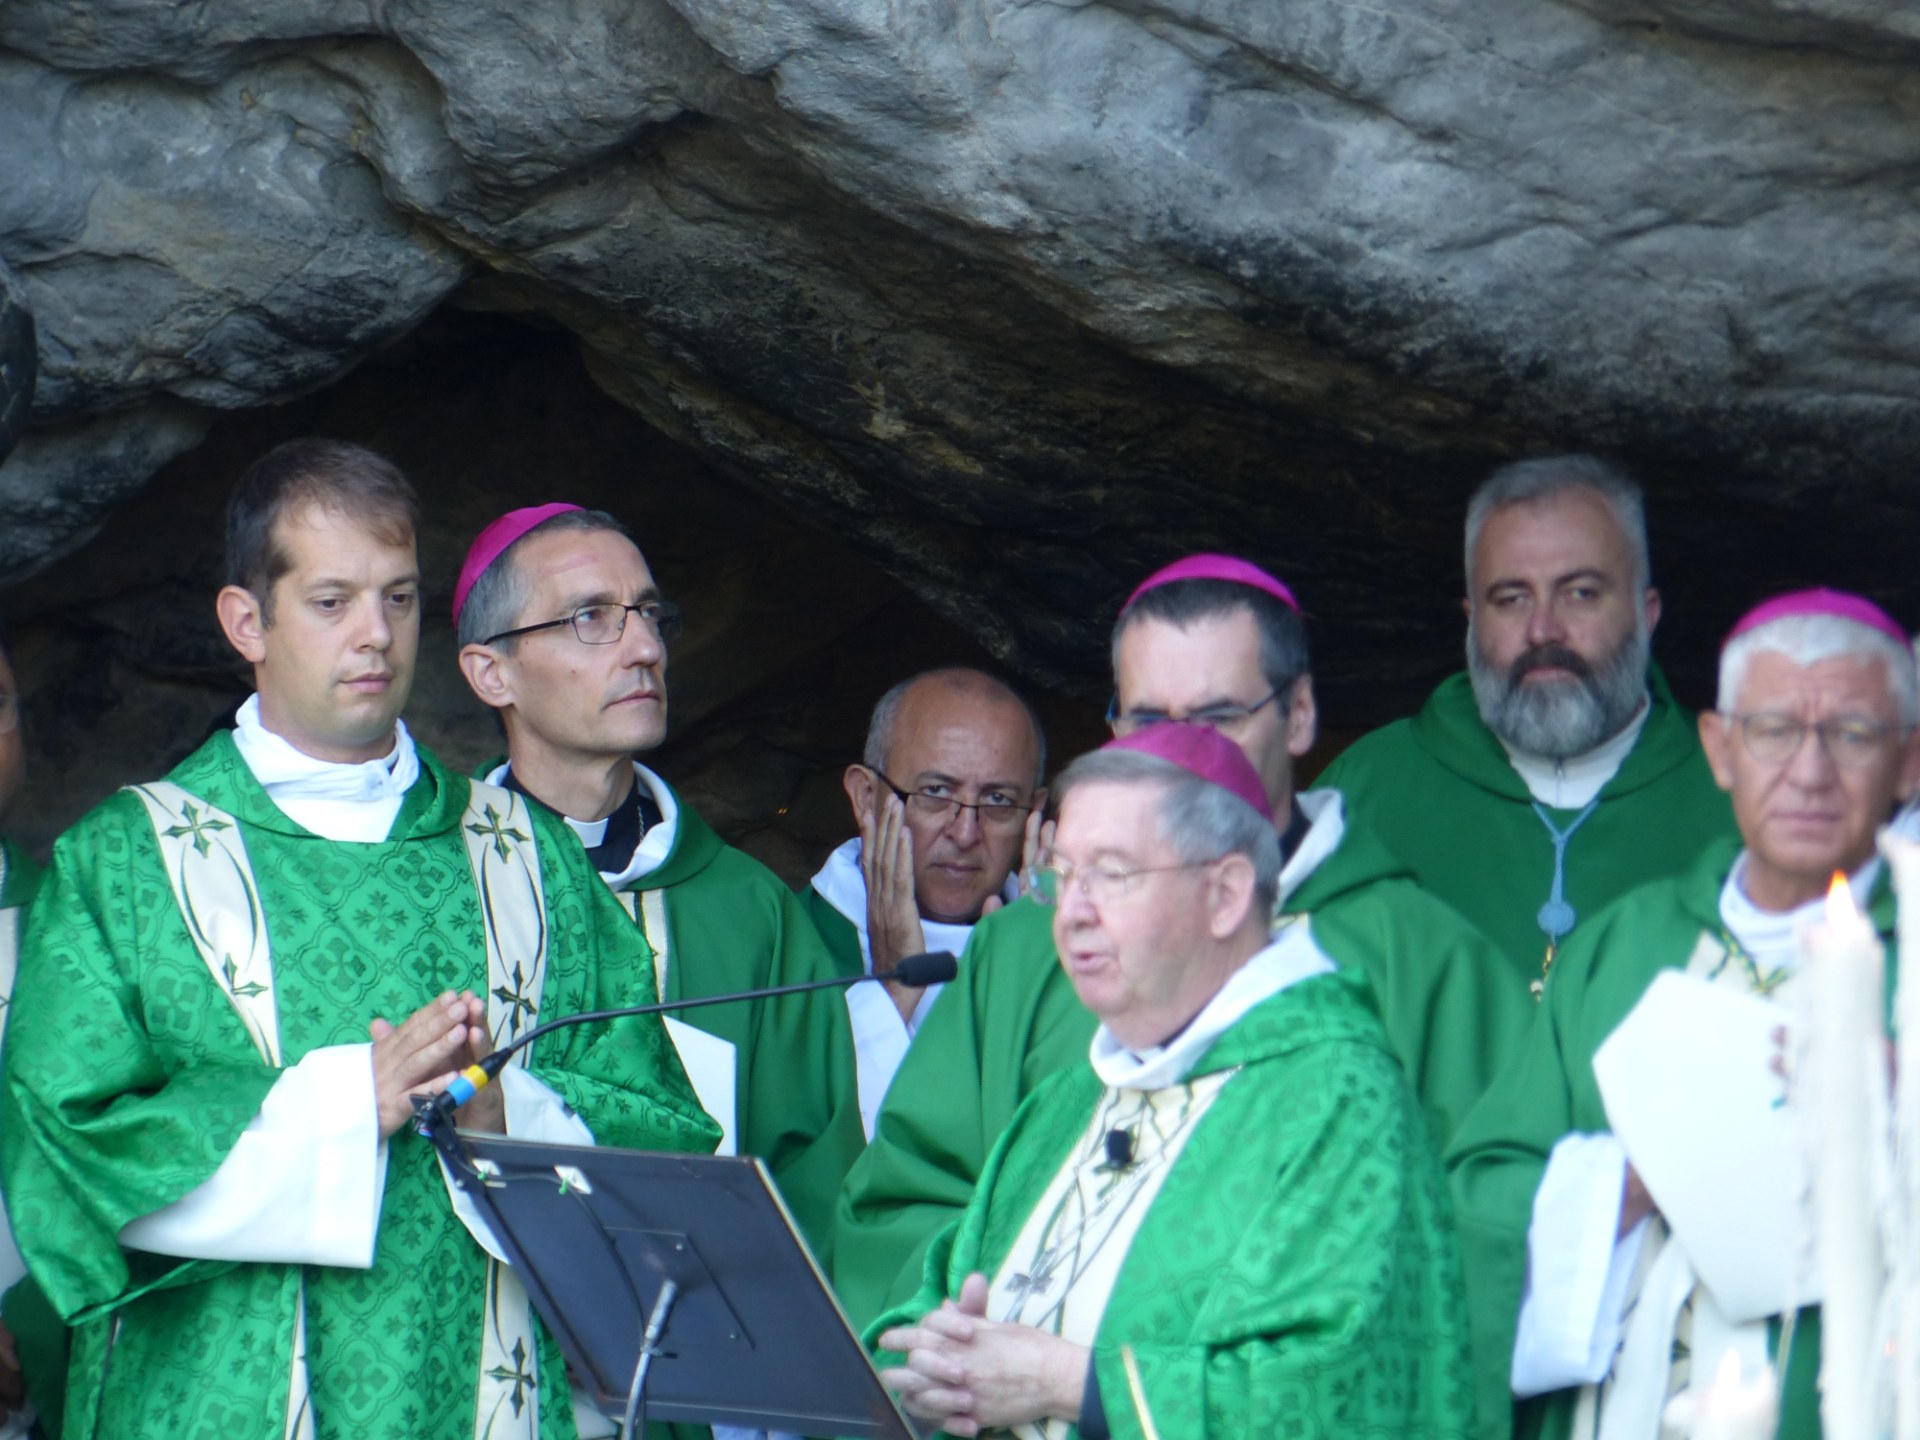 Lourdes2018-photos Angelus dimanche (10)